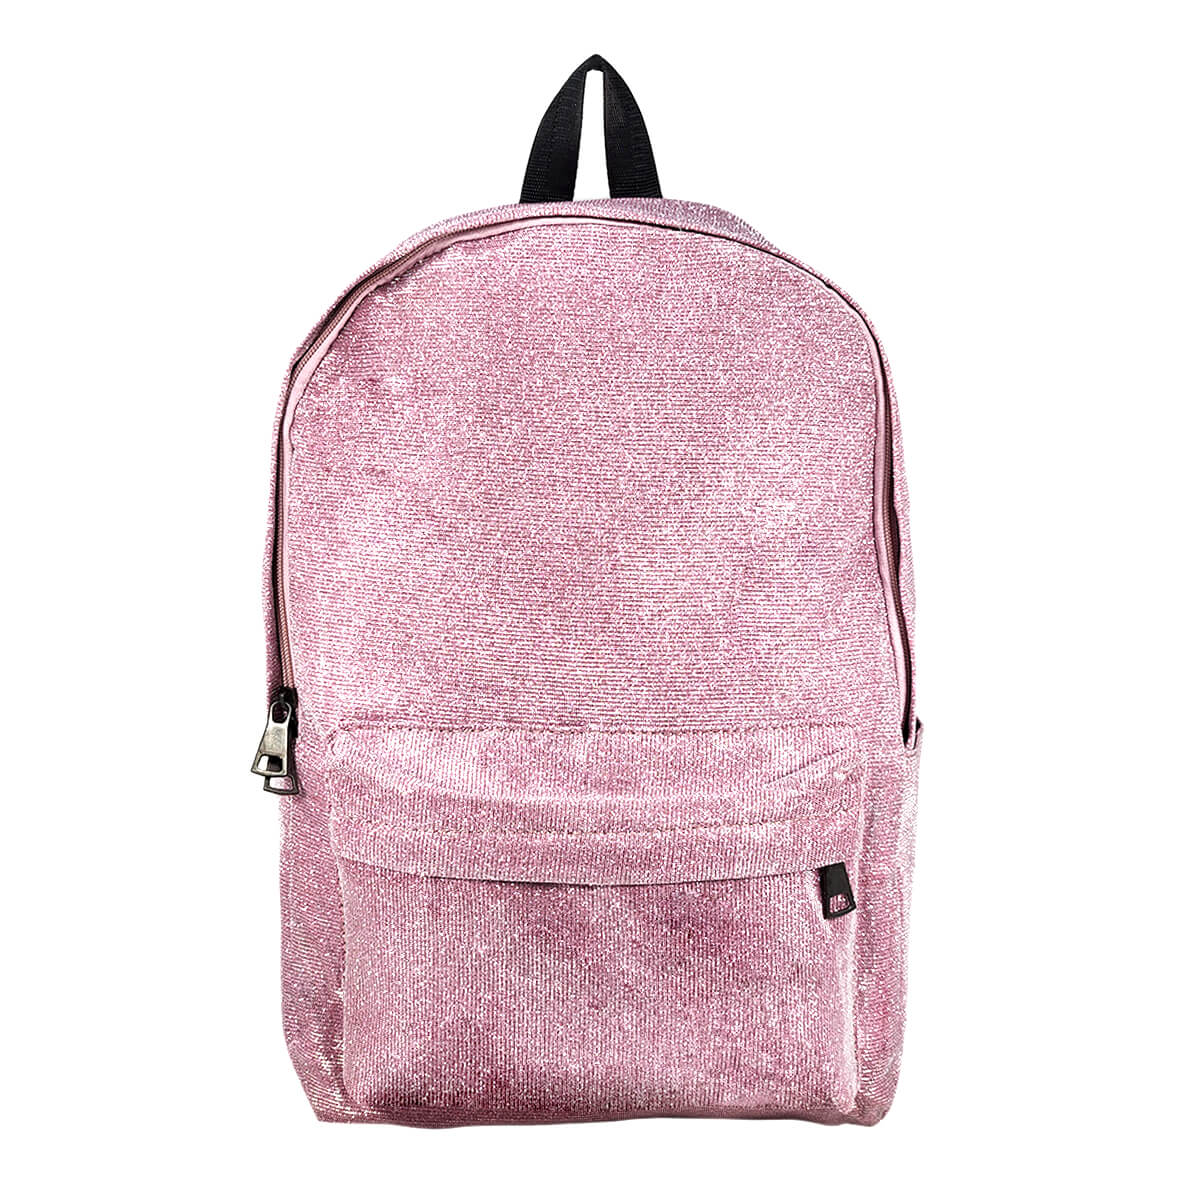 Girls Cute Mini Backpack Purse Fashion School Bags PU Leather Casual Pink |  eBay